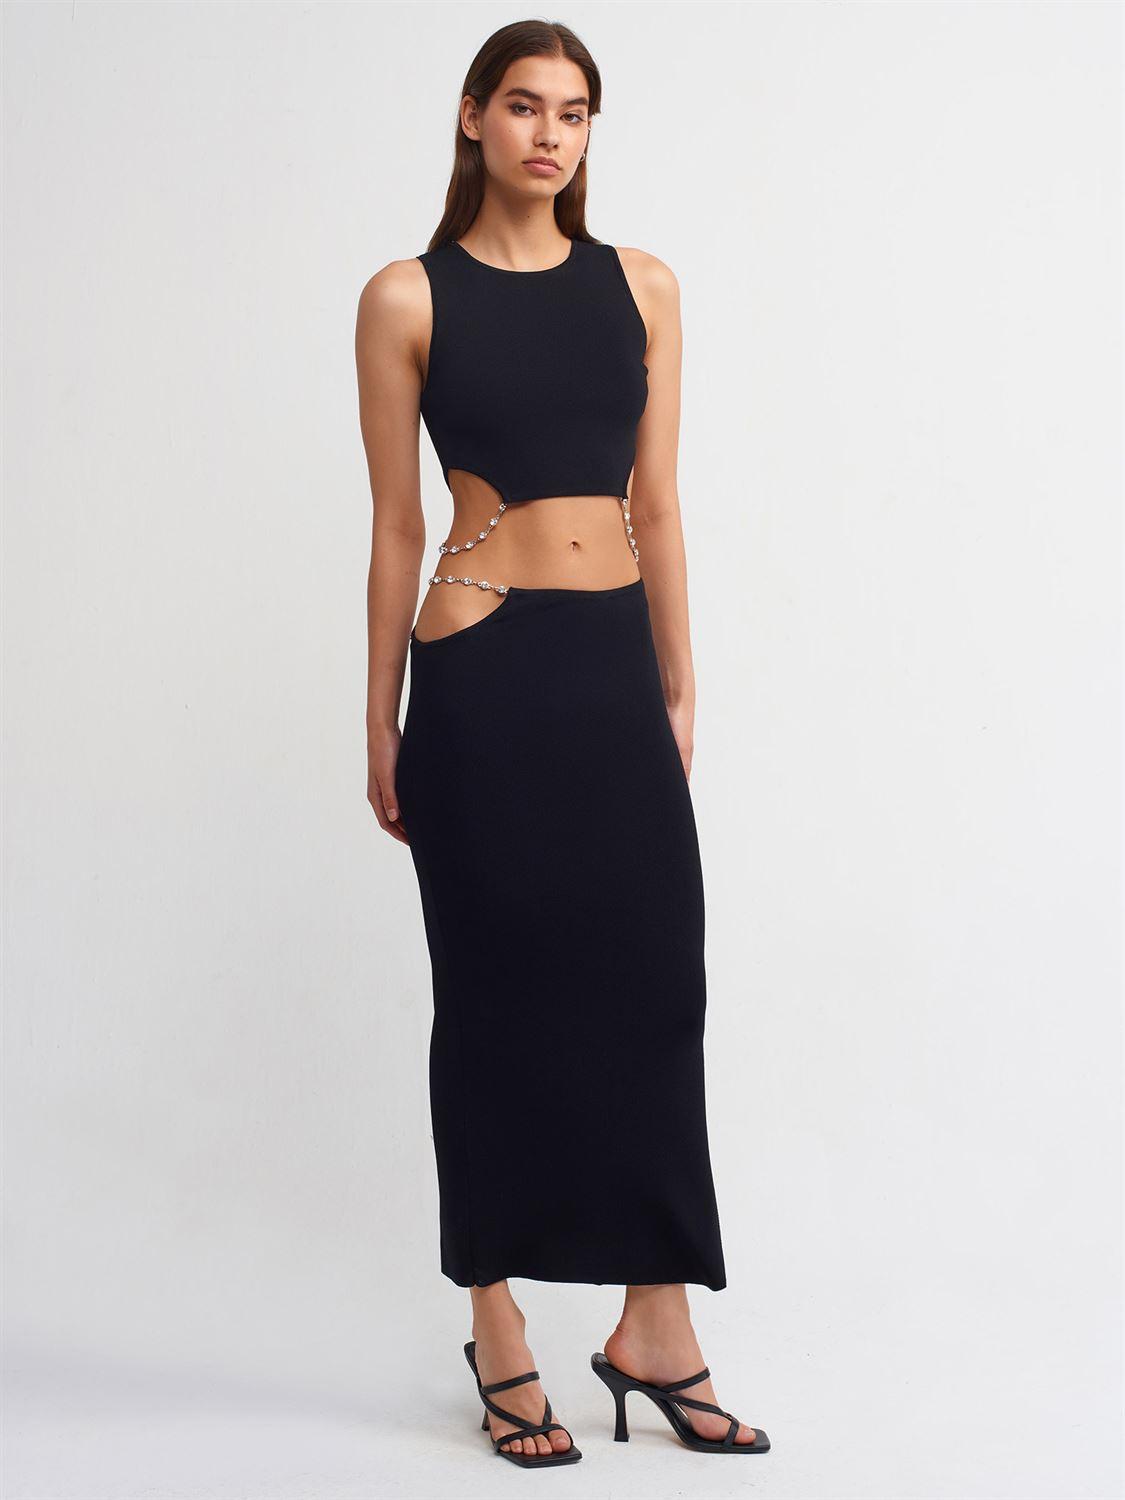 Waist Low-Cut Stone Tricot Skirt Black / One Size ZEFASH